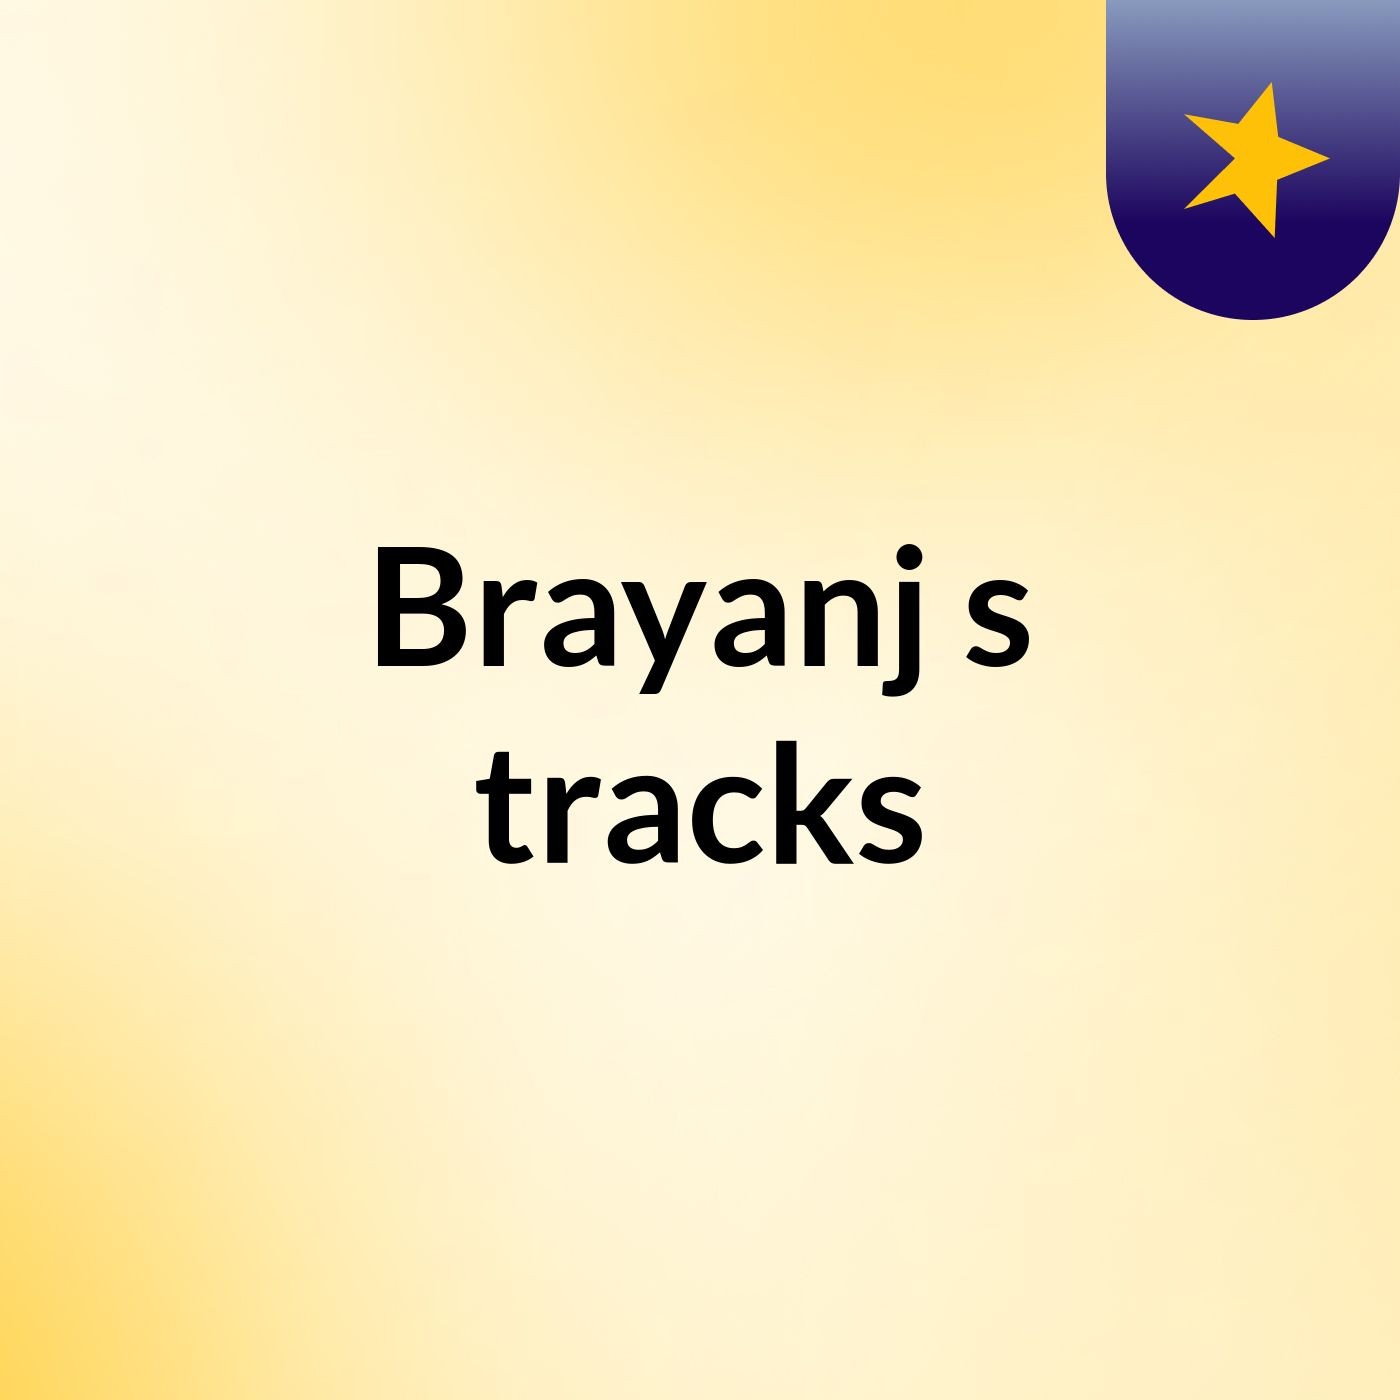 Brayanj's tracks